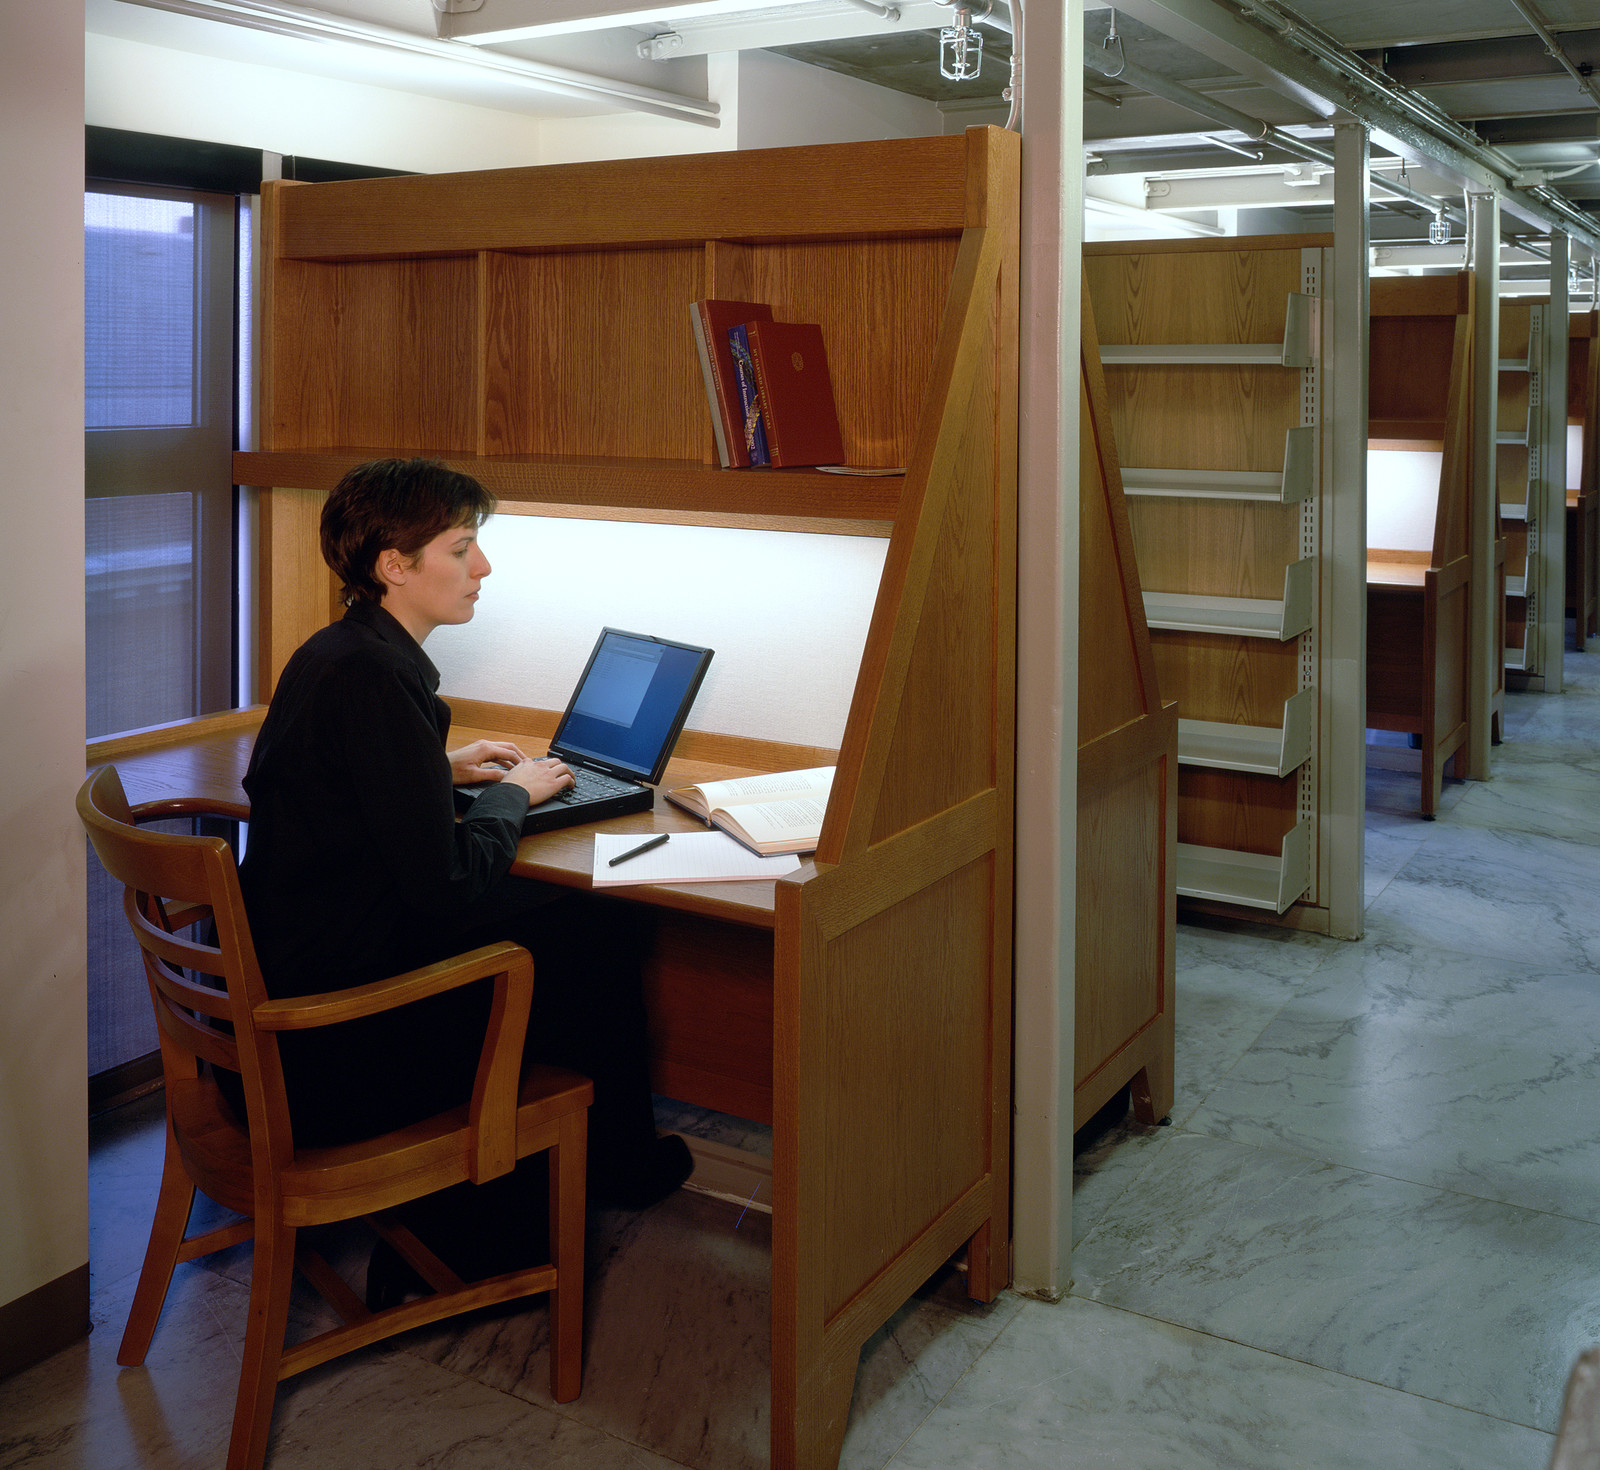 Study carrolls-Widener Library at Harvard University 